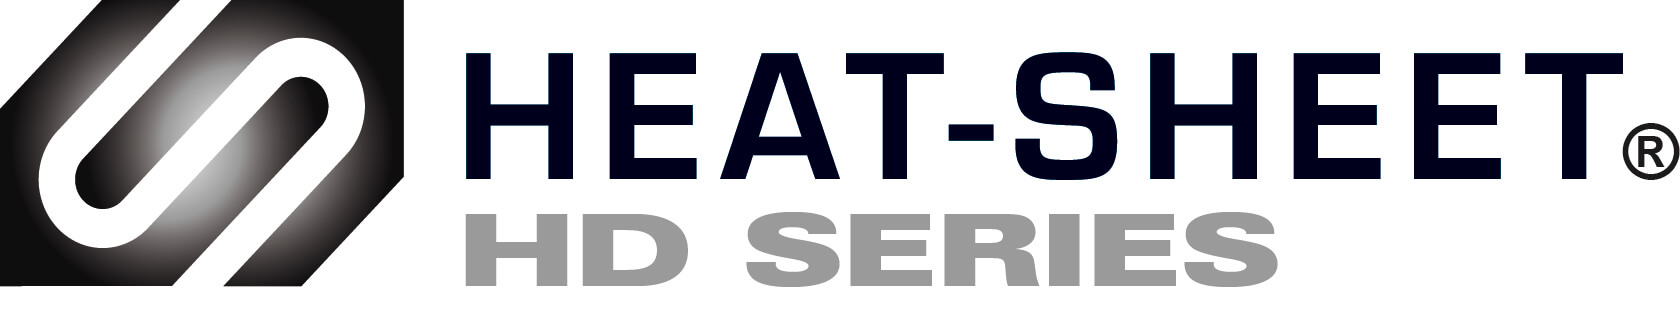 Heat-Sheet HD Series logo